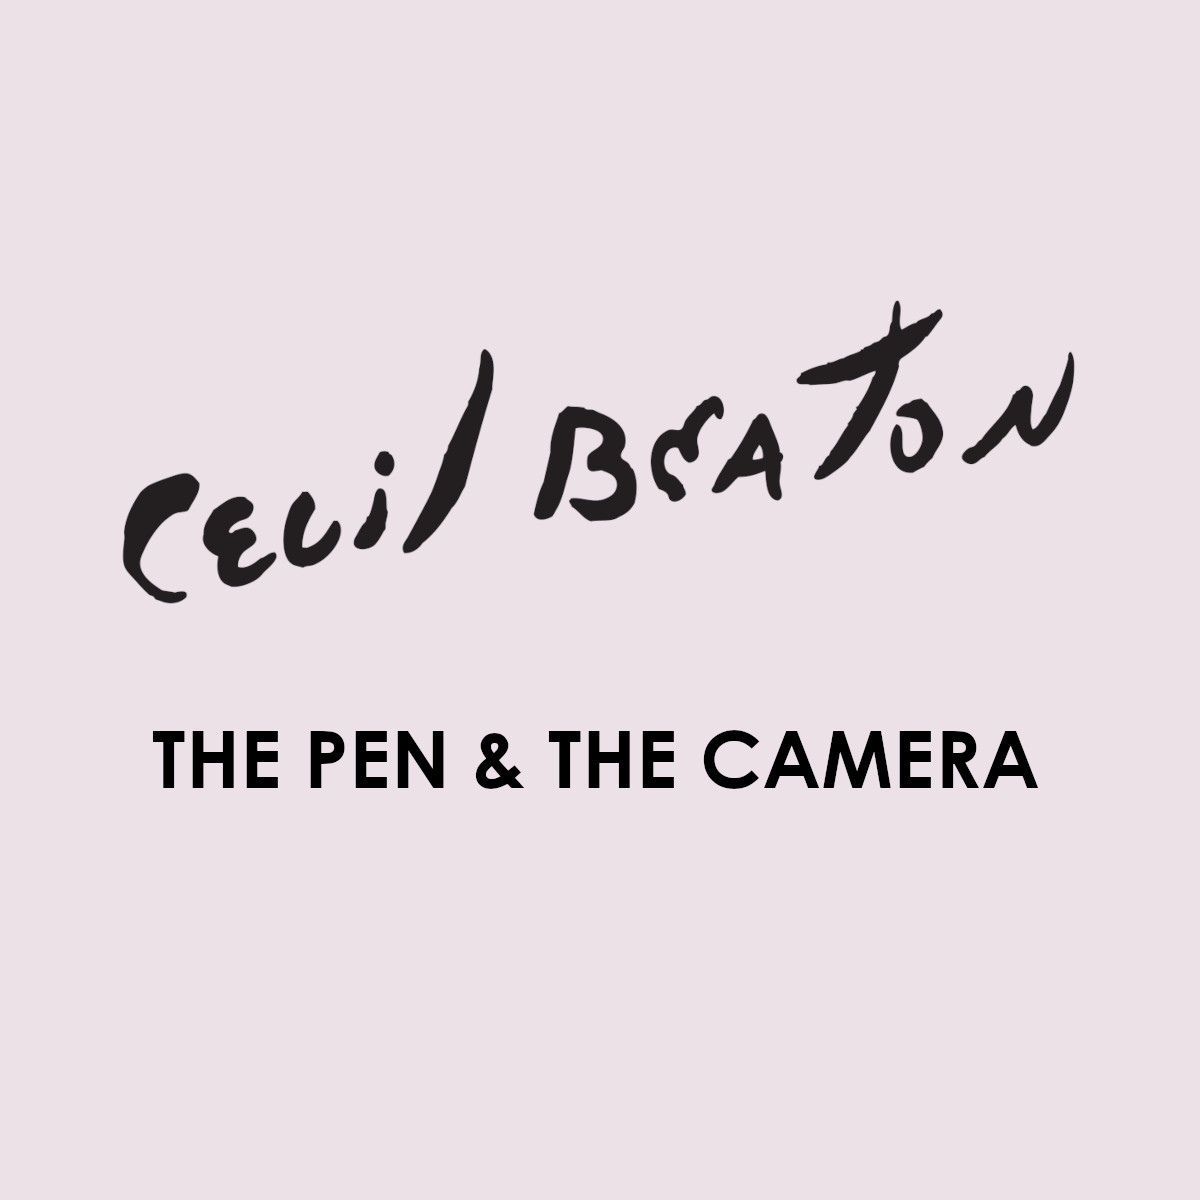 Cecil Beaton The Pen and The Camera